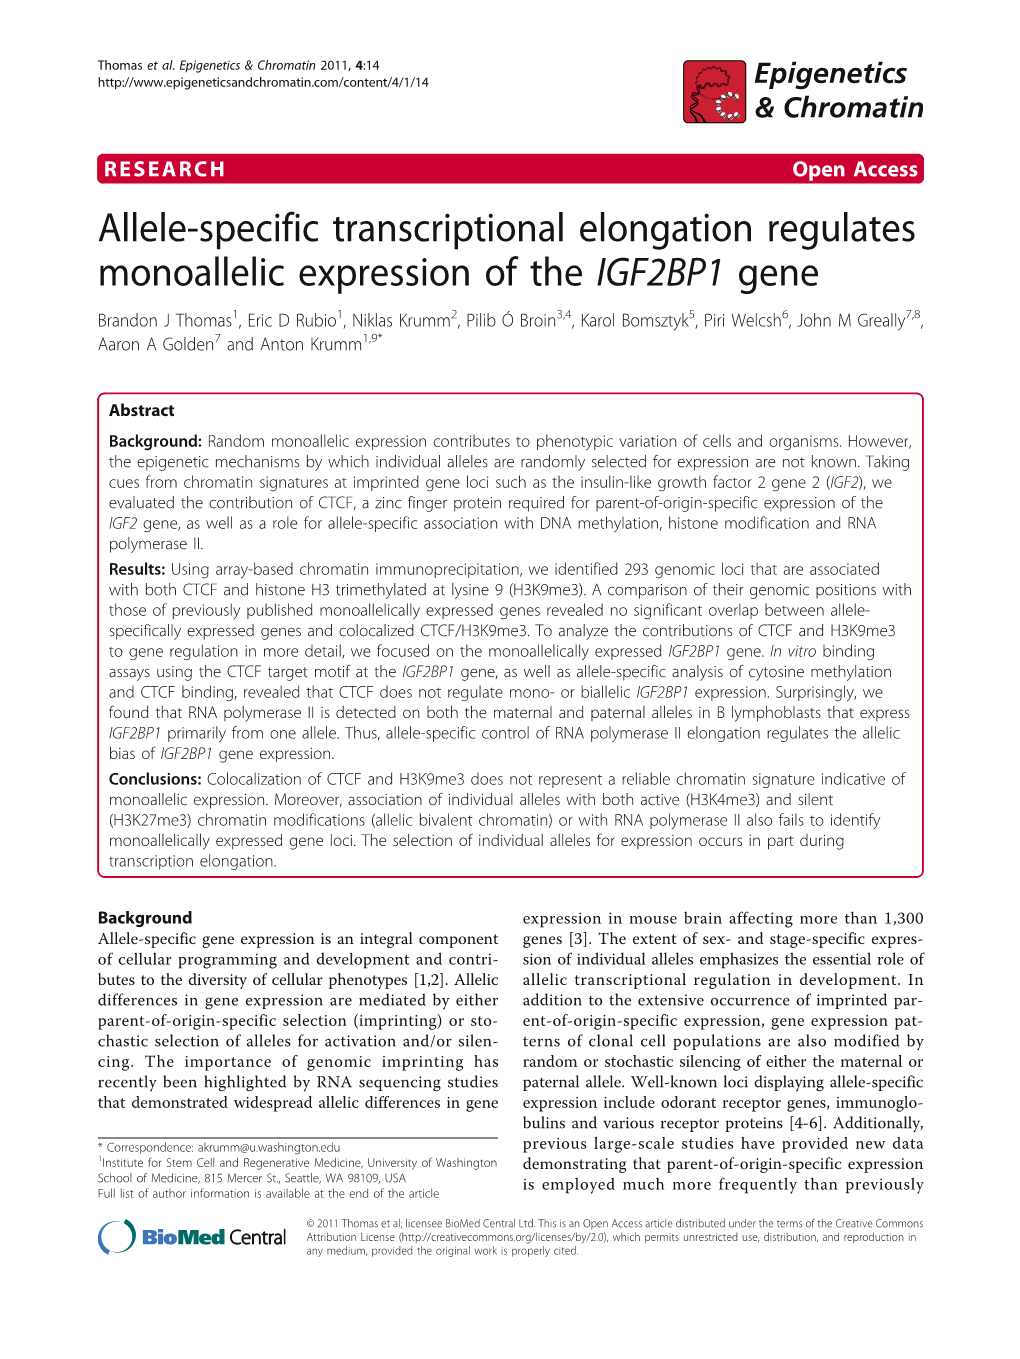 Allele-Specific Transcriptional Elongation Regulates Monoallelic Expression of the IGF2BP1 Gene